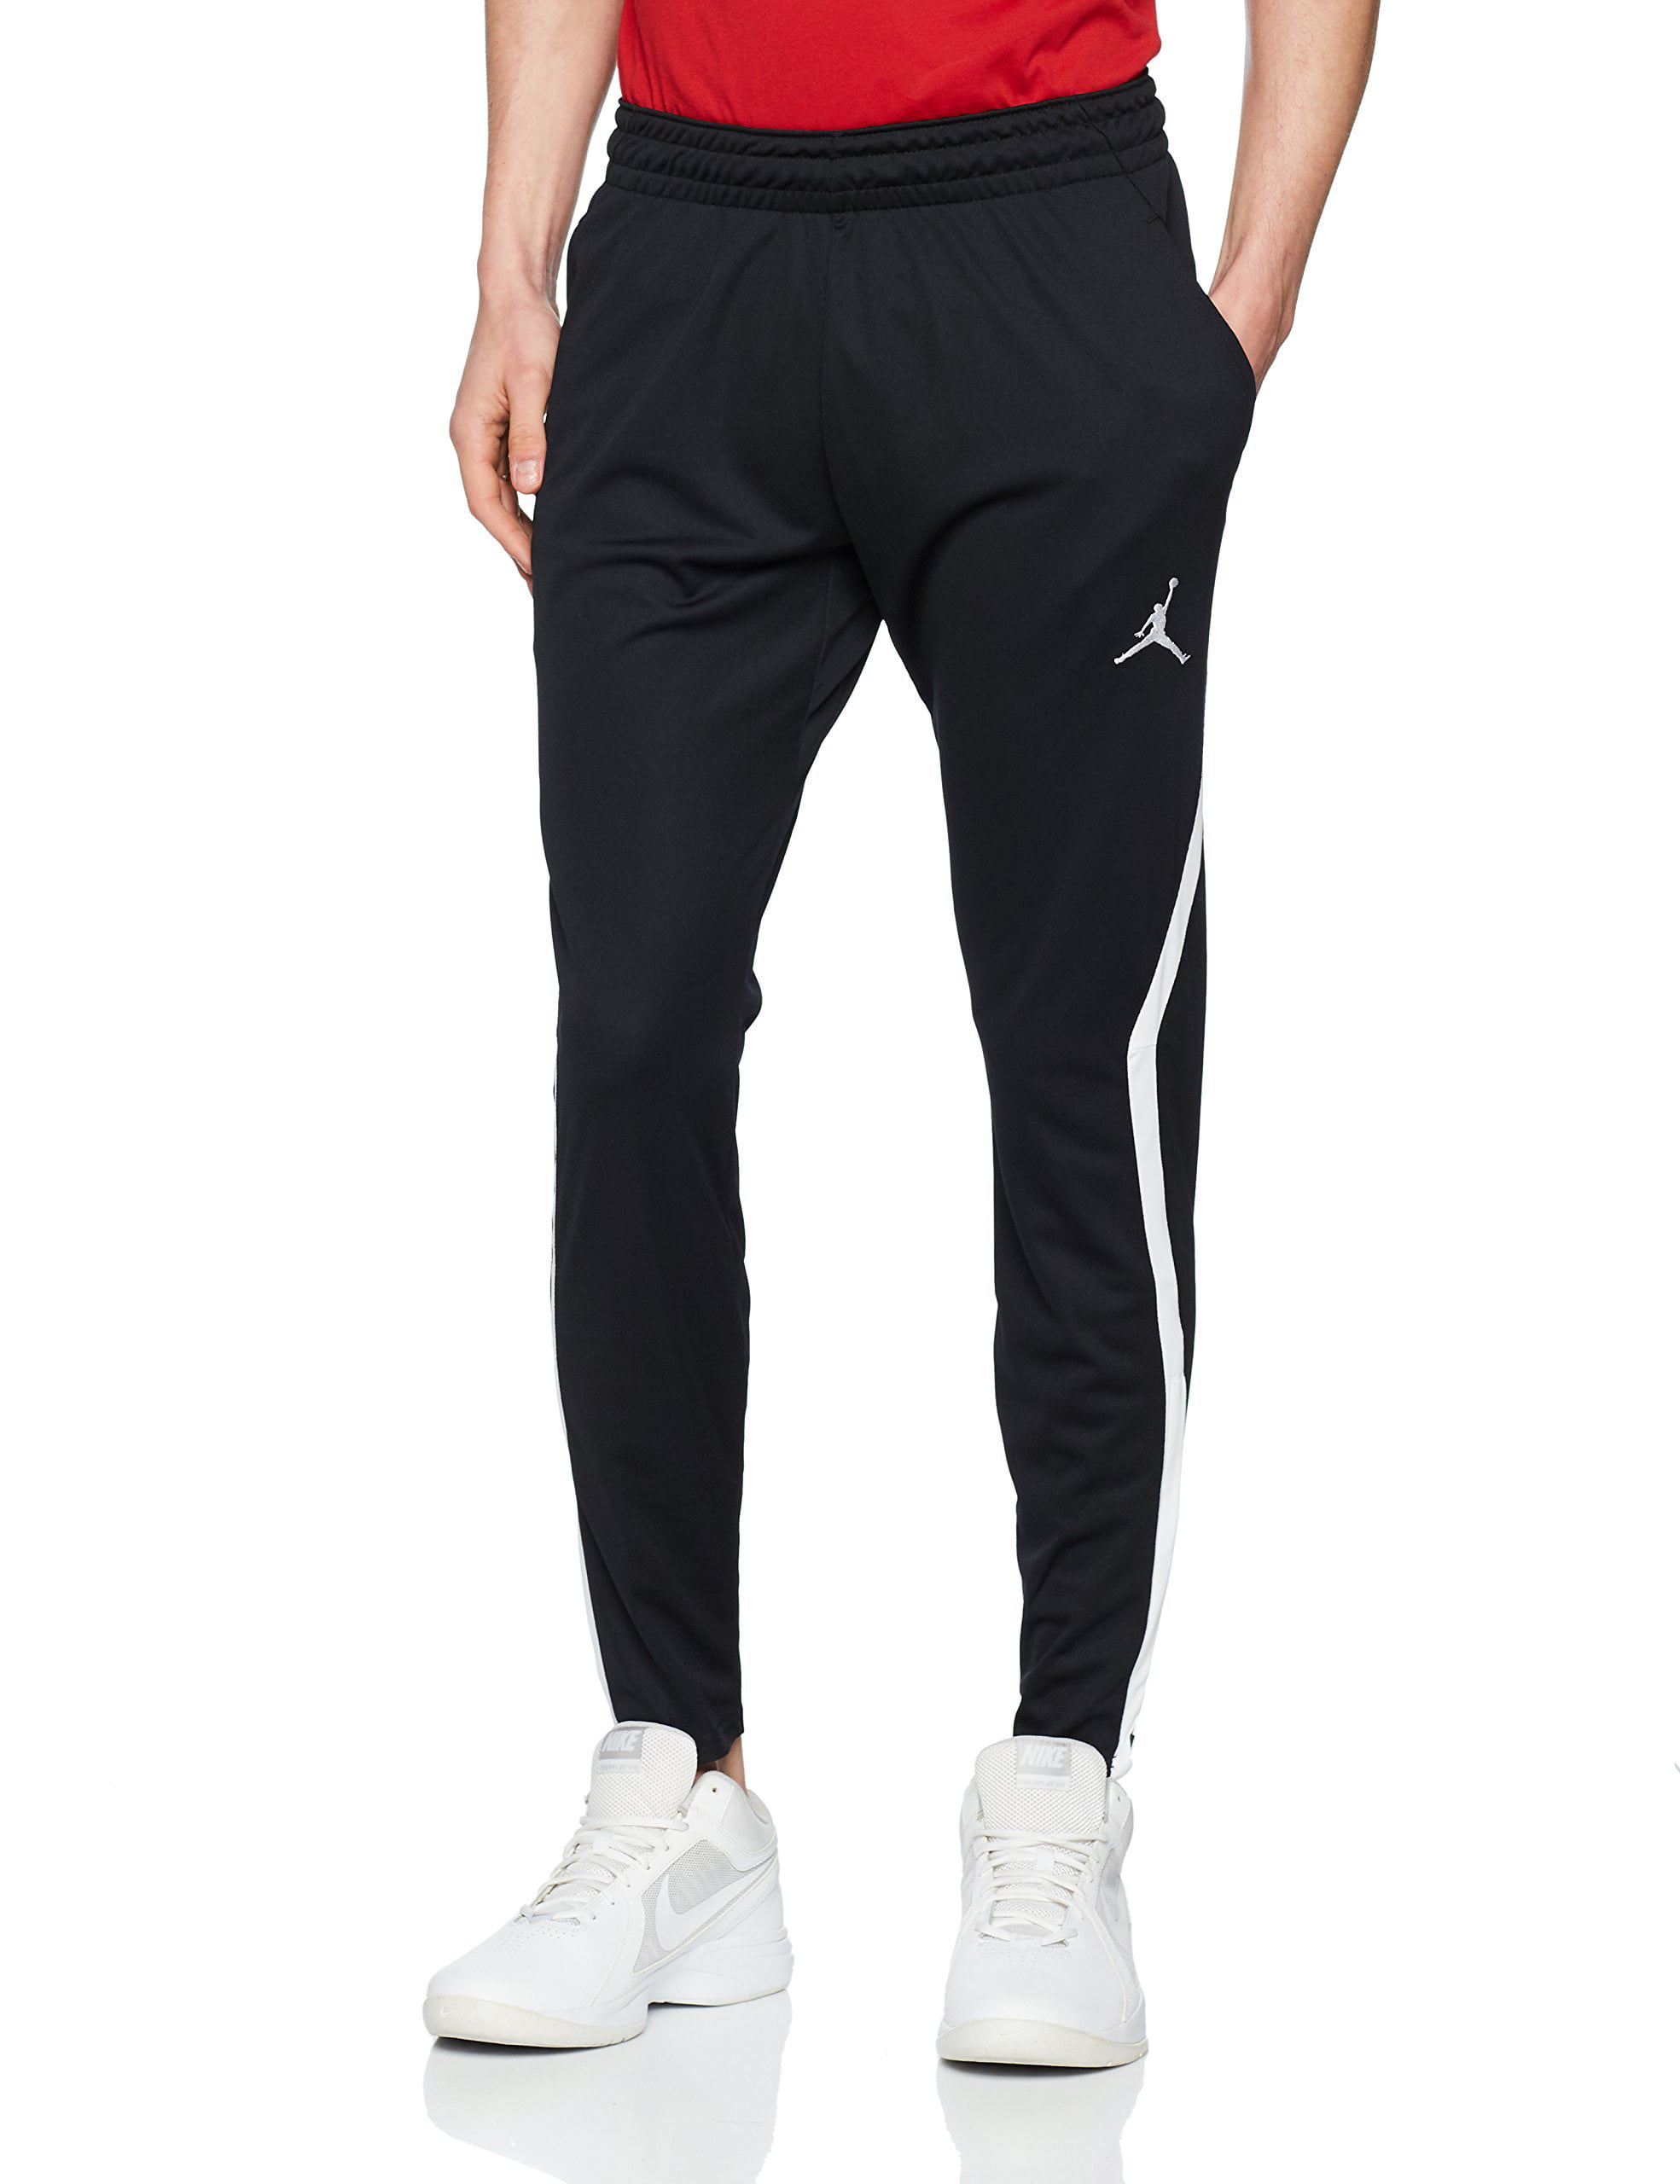 zoom Active Persuasive Nike 889711-014: Jordan 23 Alpha Dry Mens Black/White/White Pants (XL) -  Walmart.com